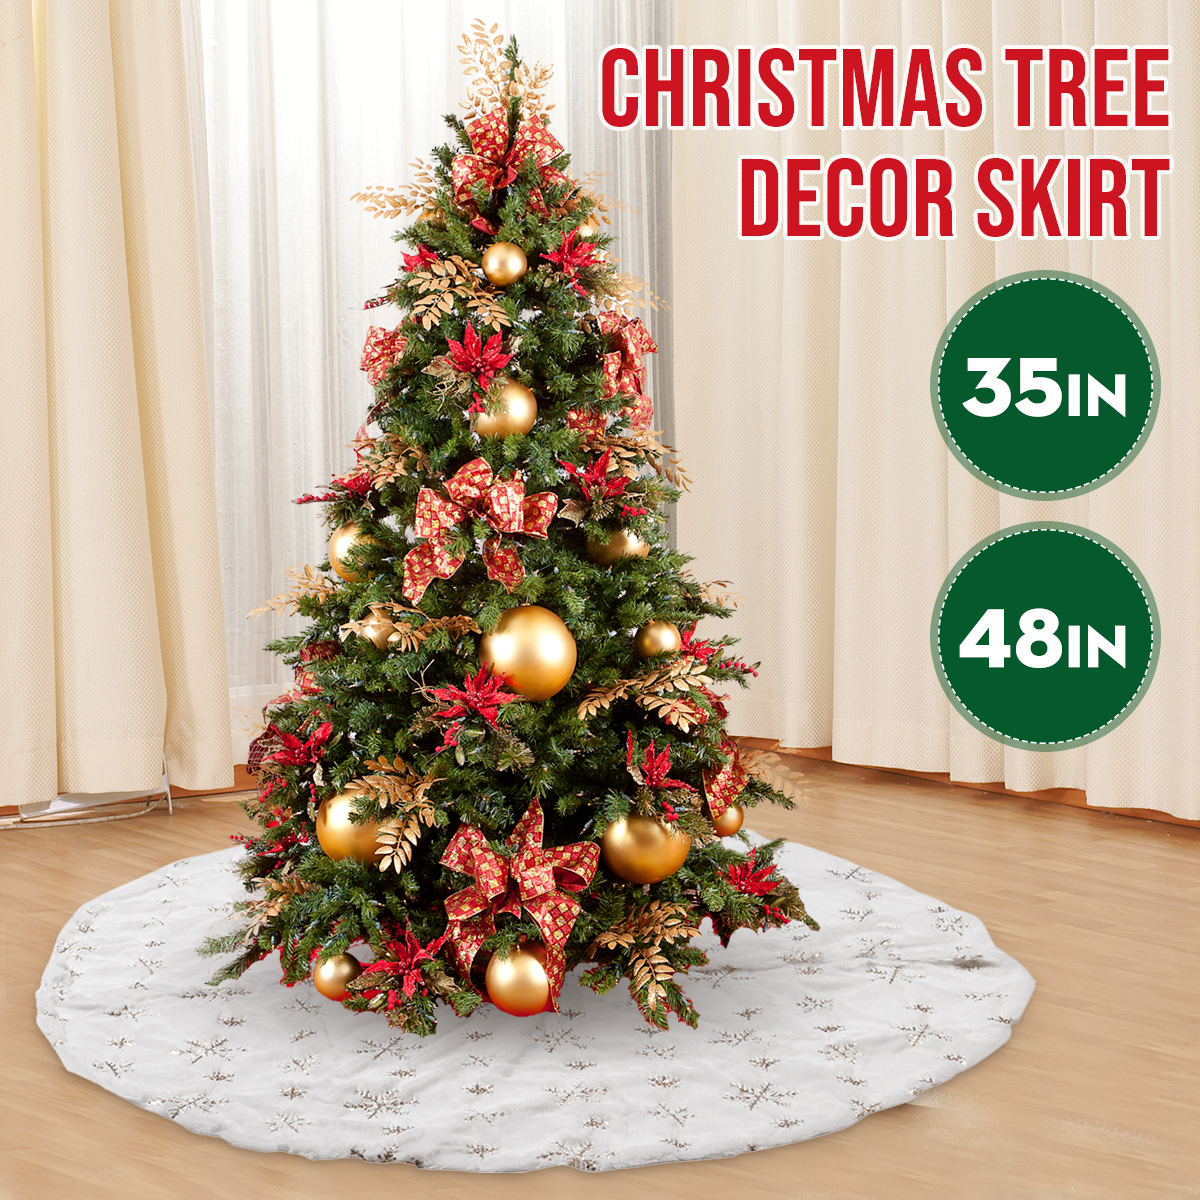 3548inch-Christmas-Tree-Dress-Skirt-Decor-Carpet-Xmas-Decoration-for-2020-Christmas-Party-Decoration-1775188-1